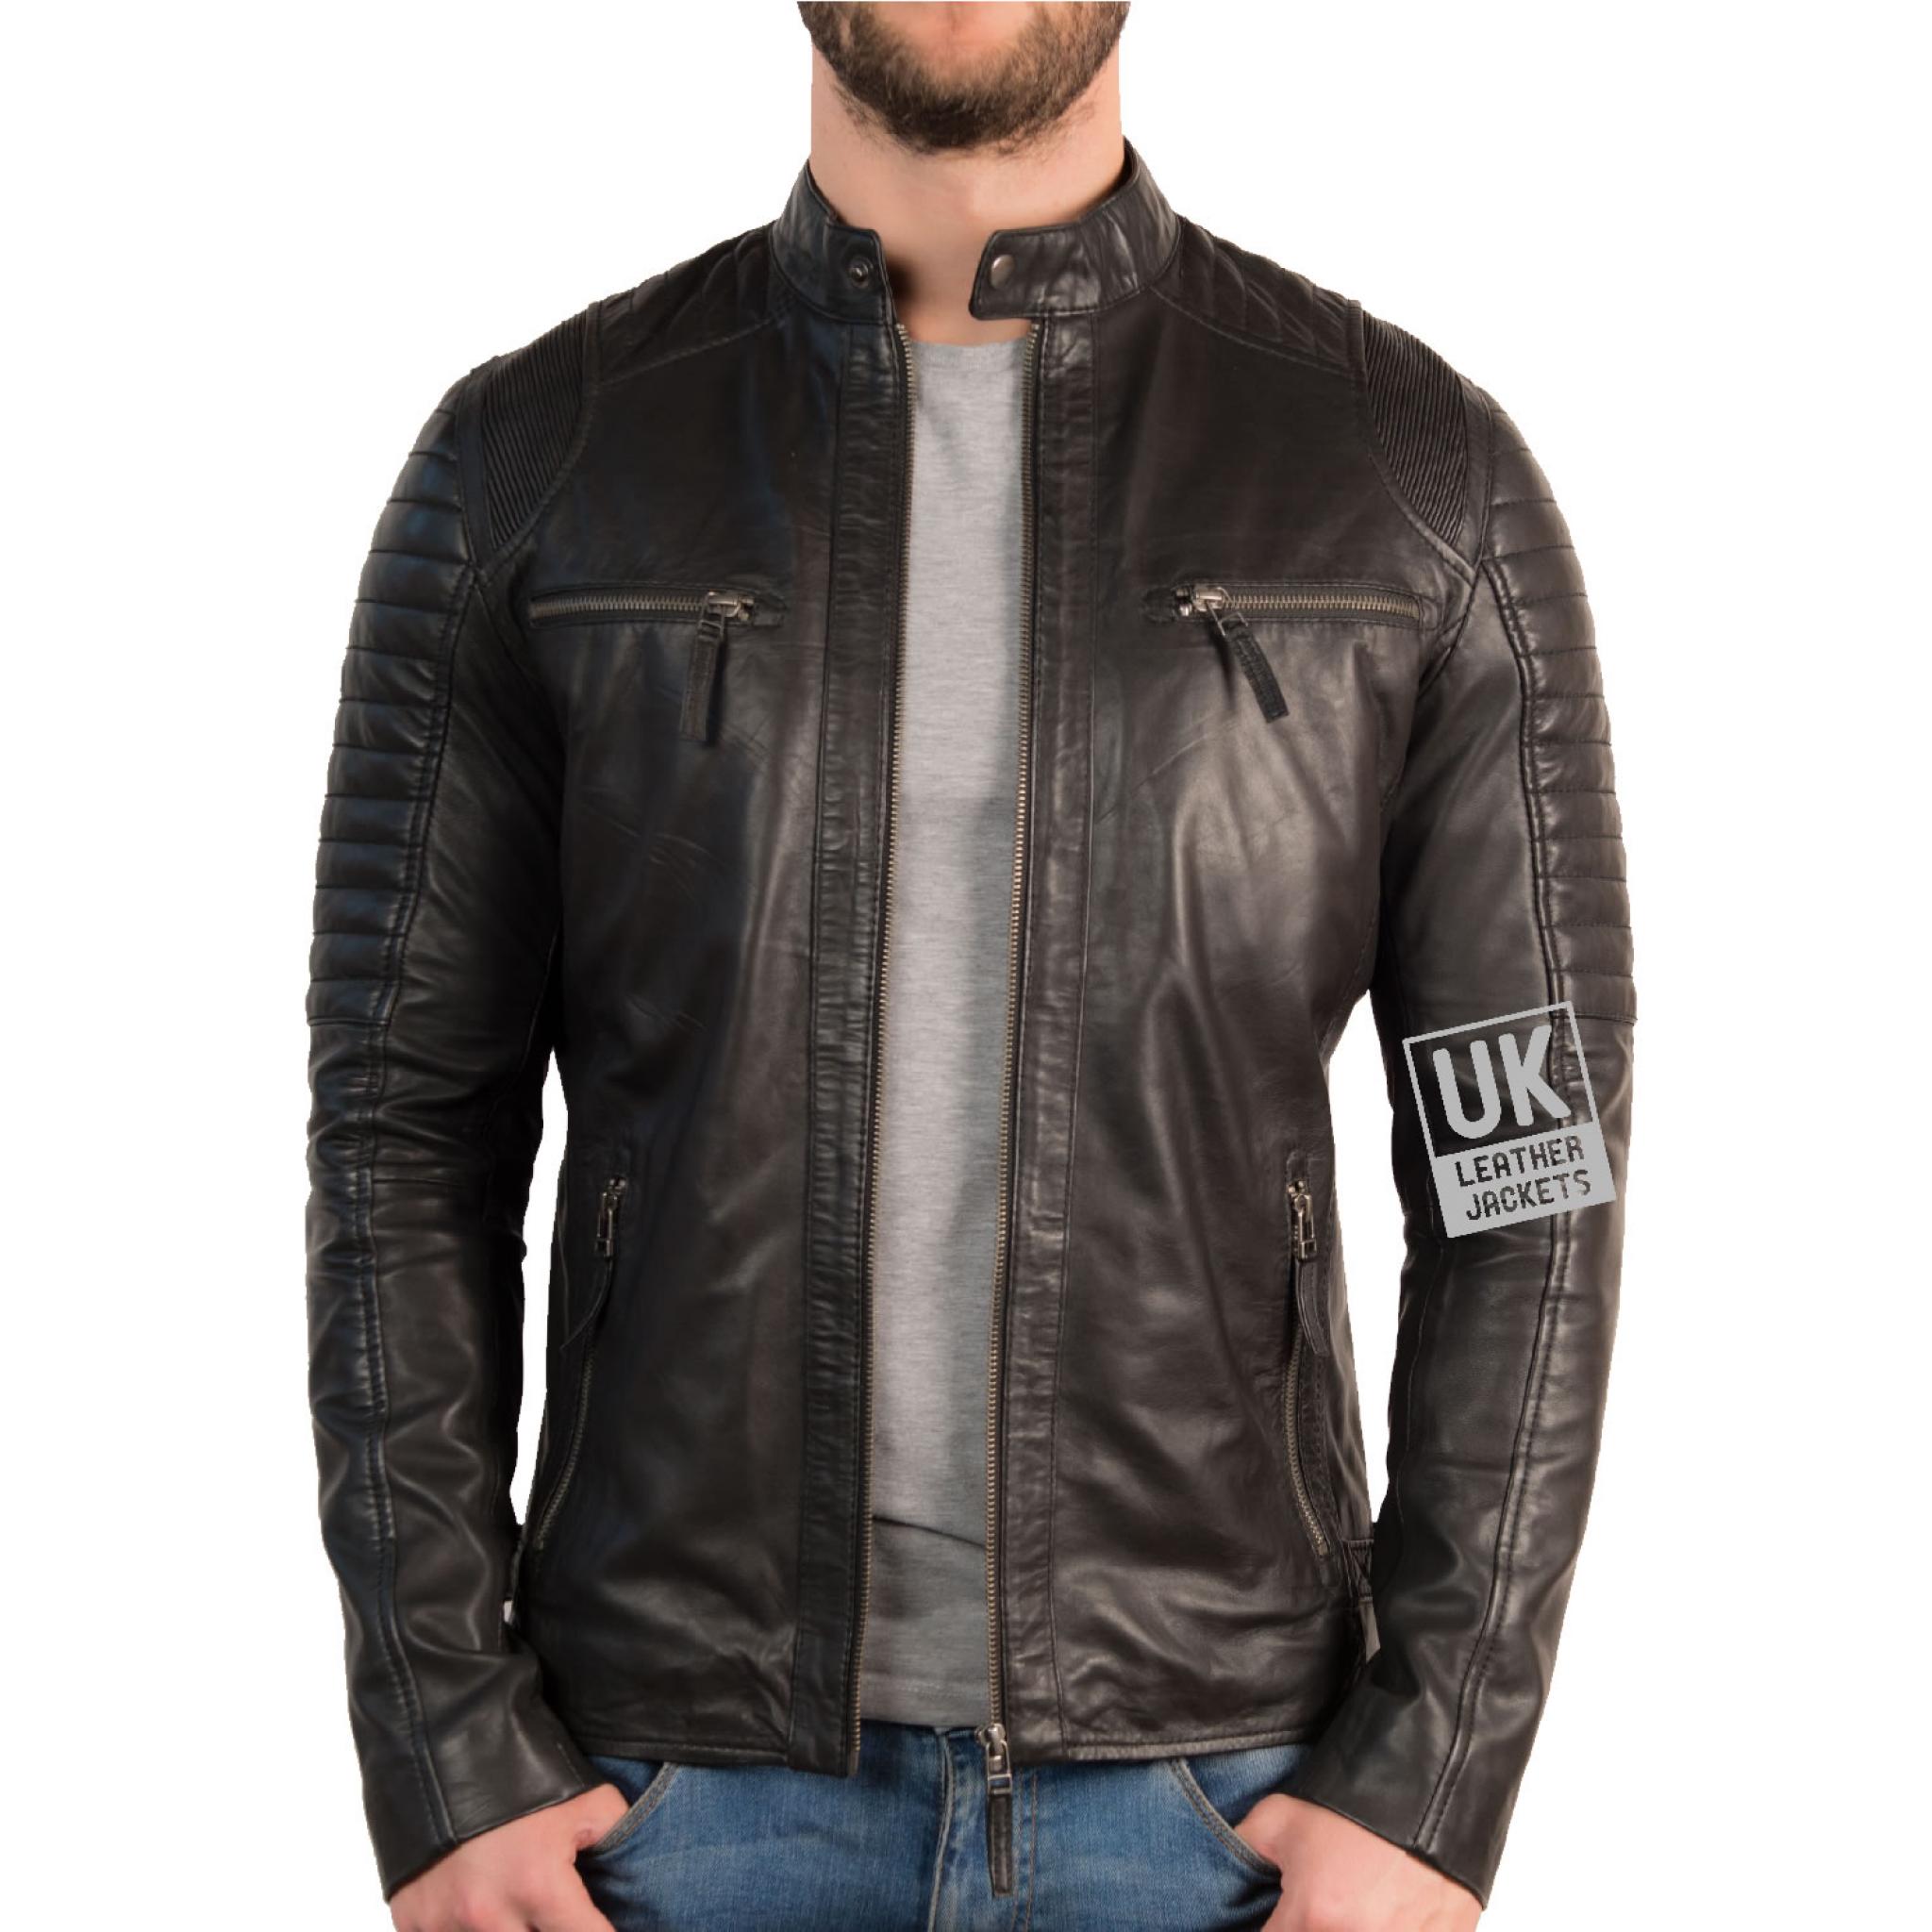 Mens Black Leather Biker Jacket | UK Leather Jackets